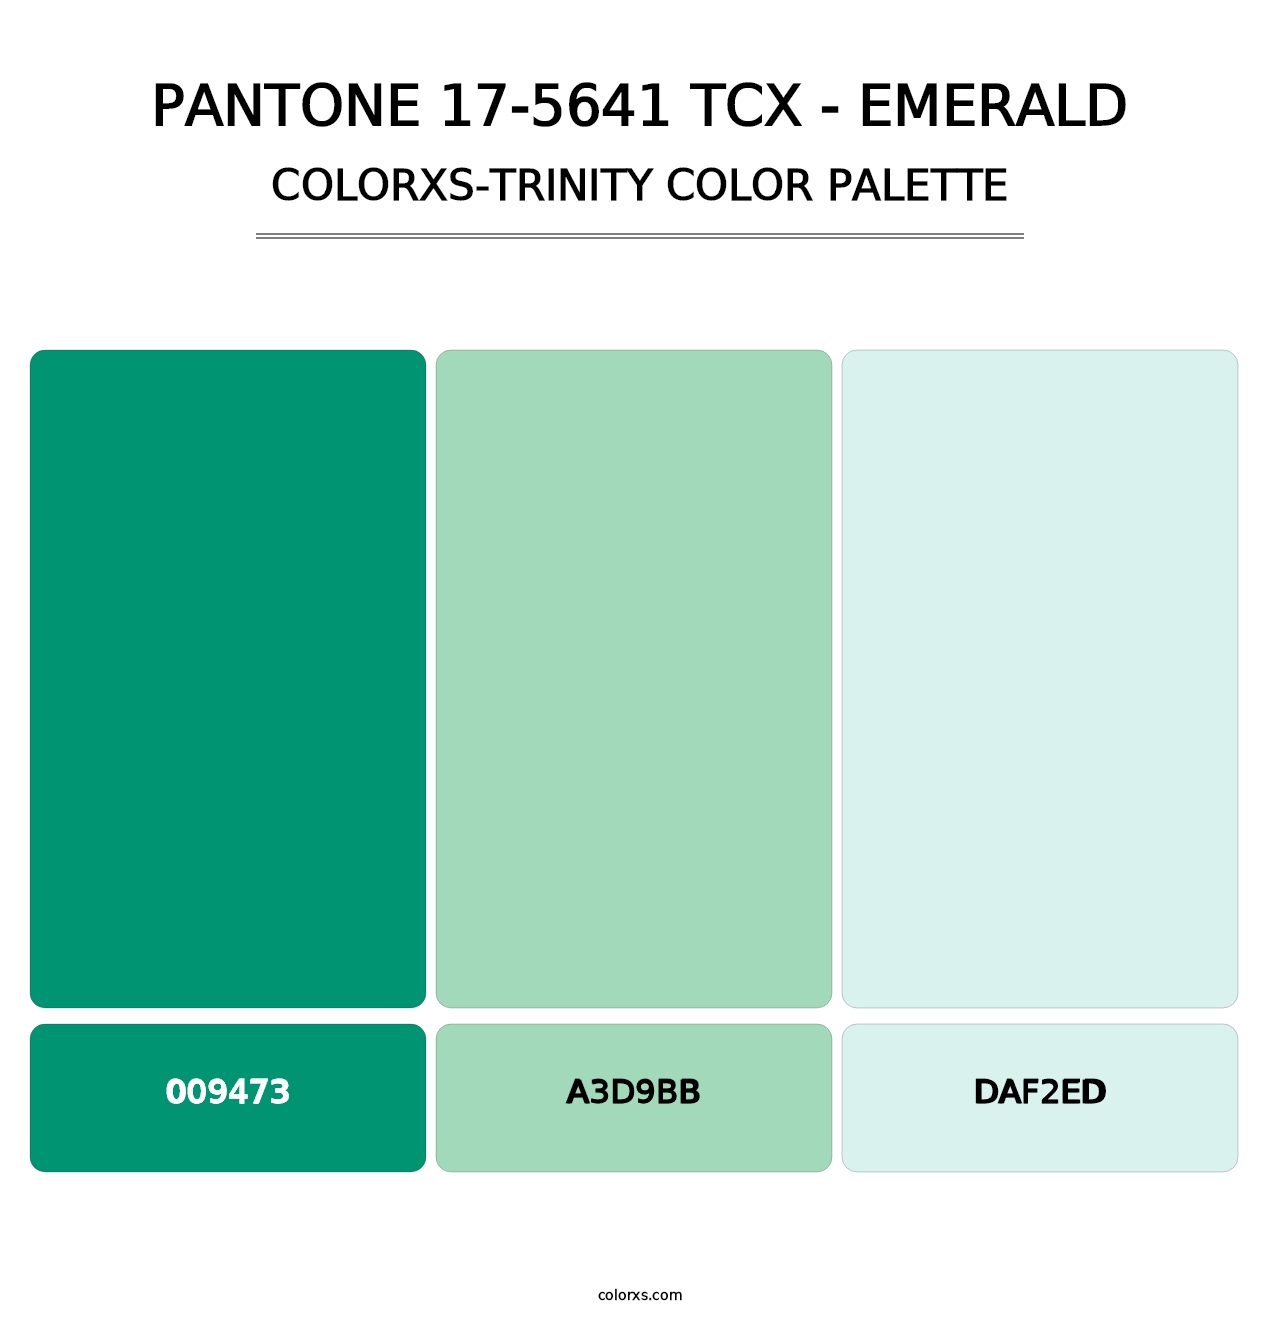 PANTONE 17-5641 TCX - Emerald - Colorxs Trinity Palette